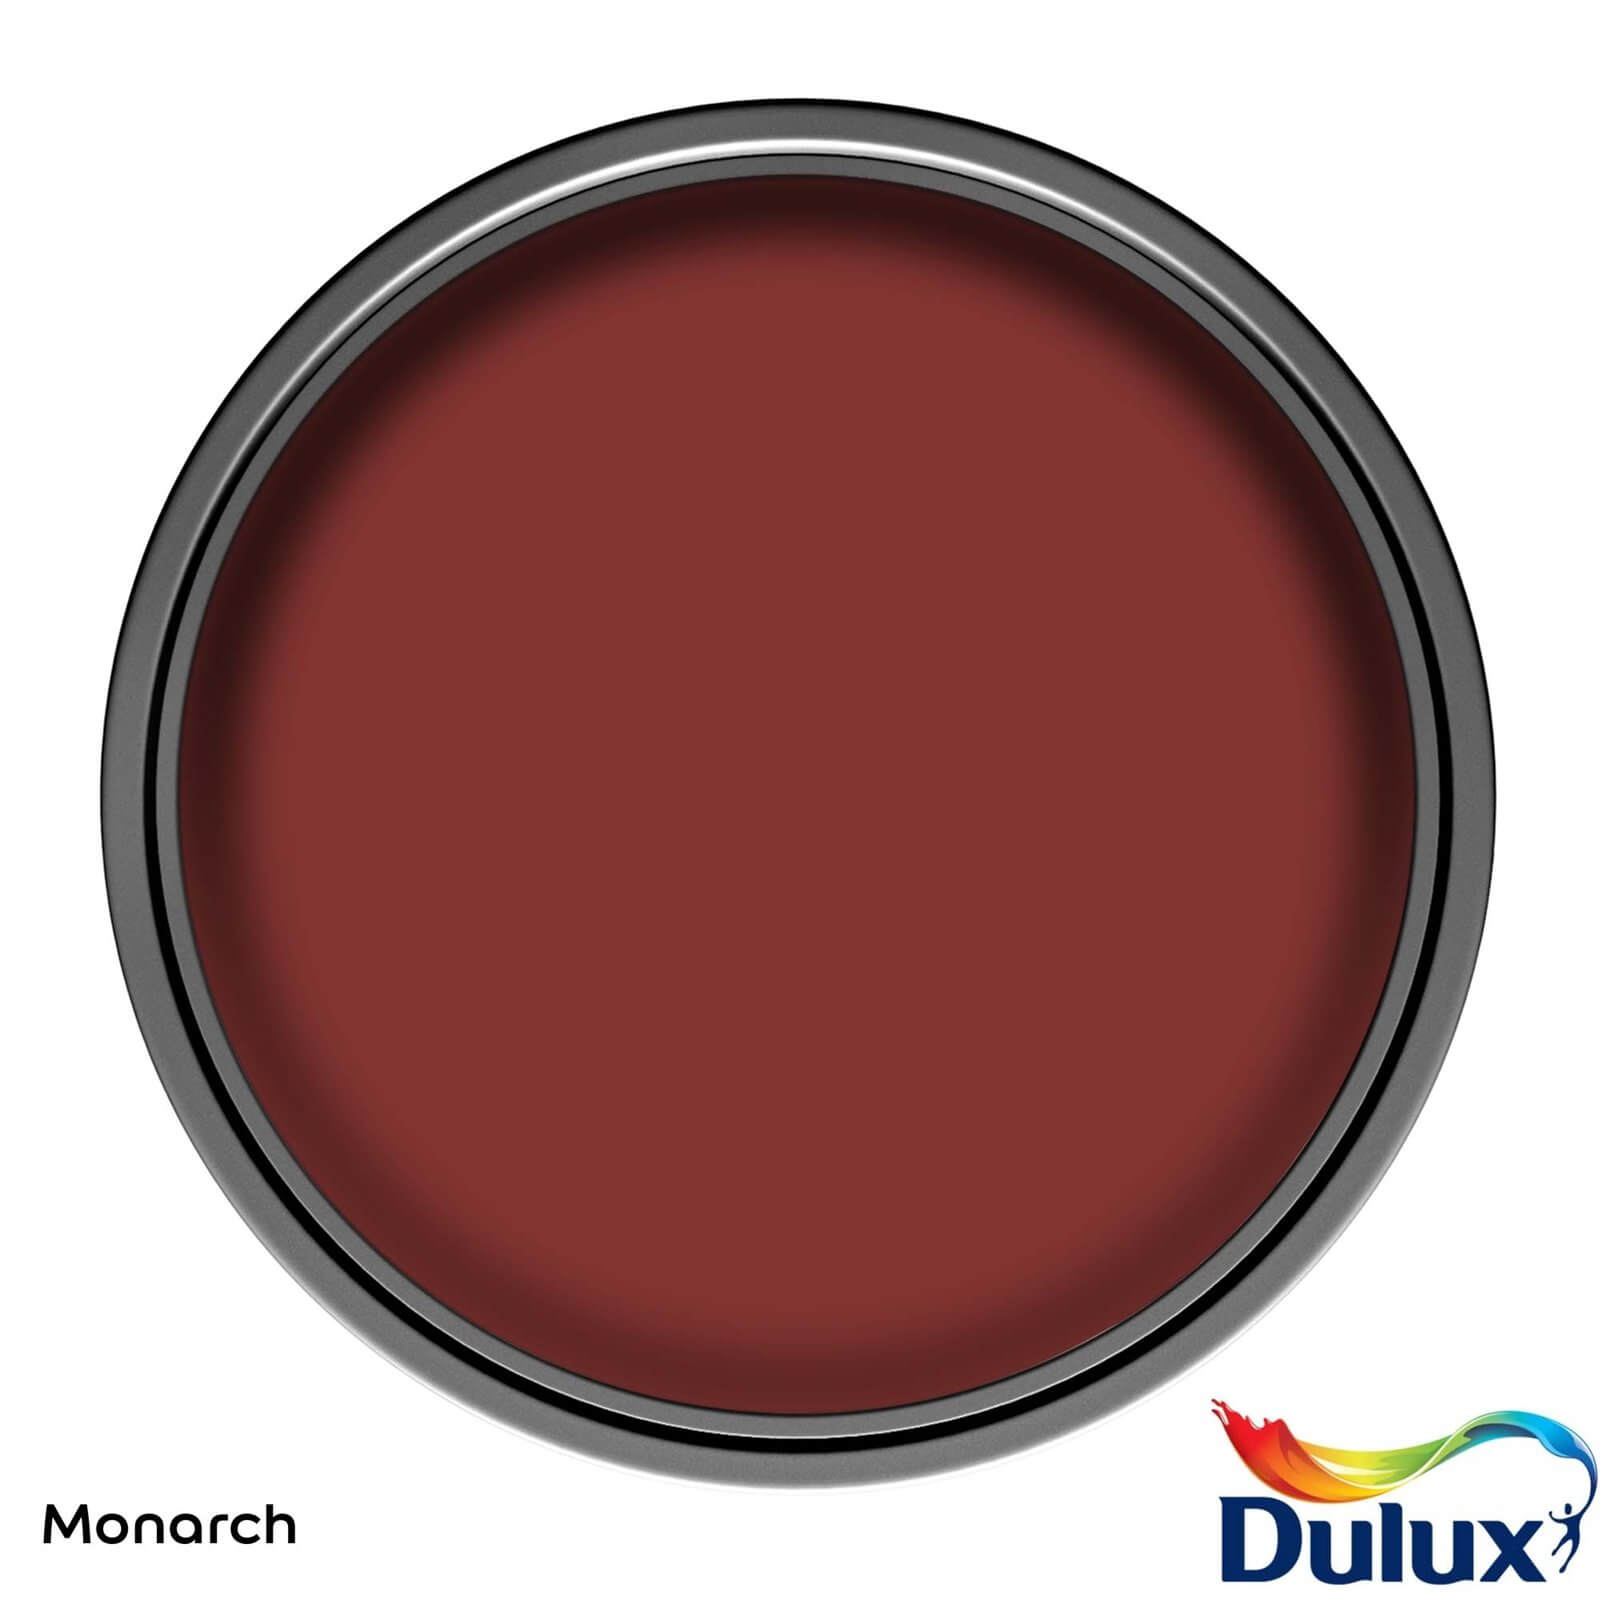 Dulux Weathershield Exterior Gloss Paint Monarch - 750ml